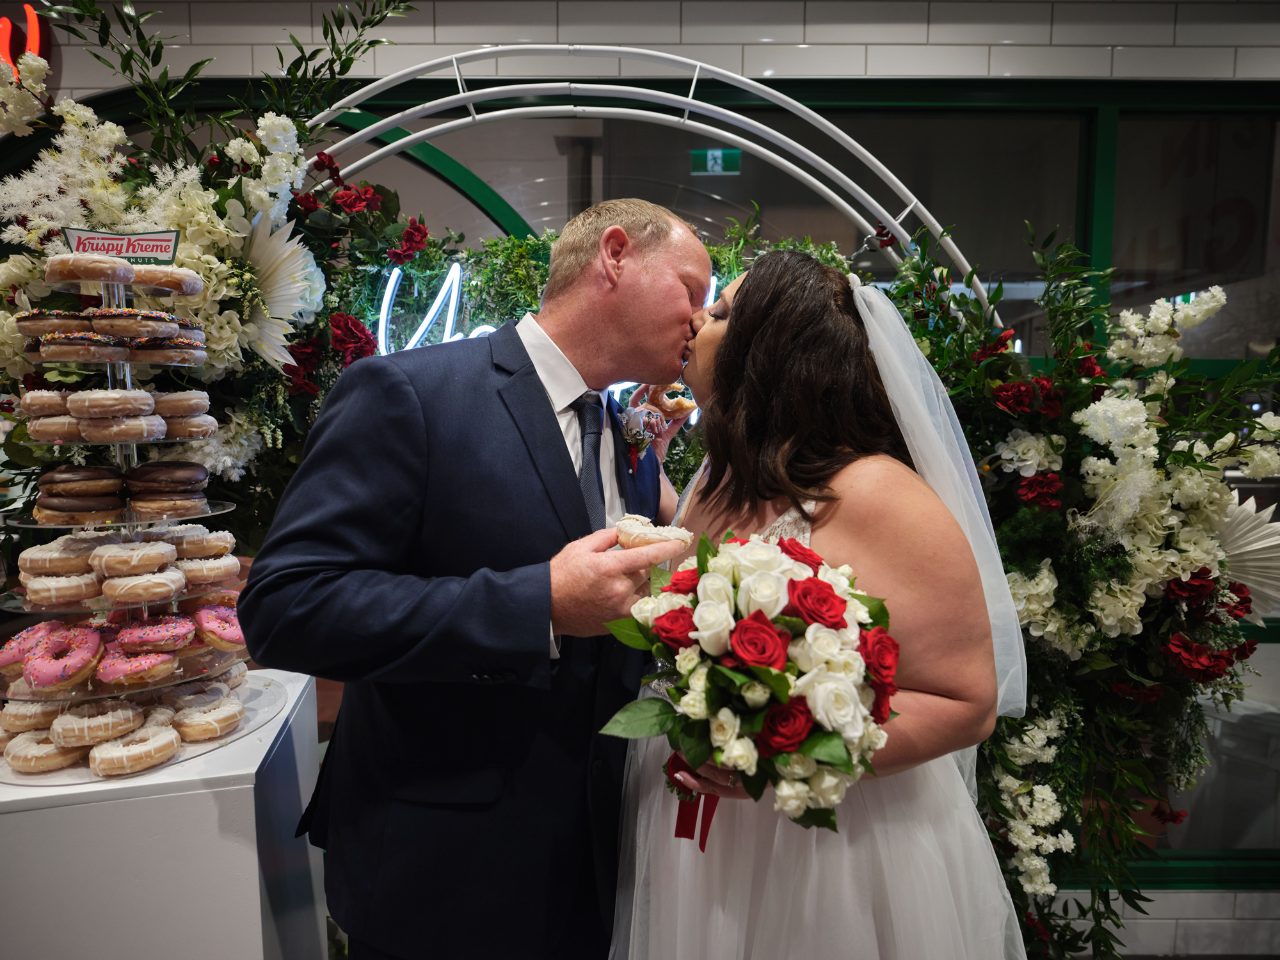 Cimonette and Carl Labuschange get married at Krispy Kreme New Lynn